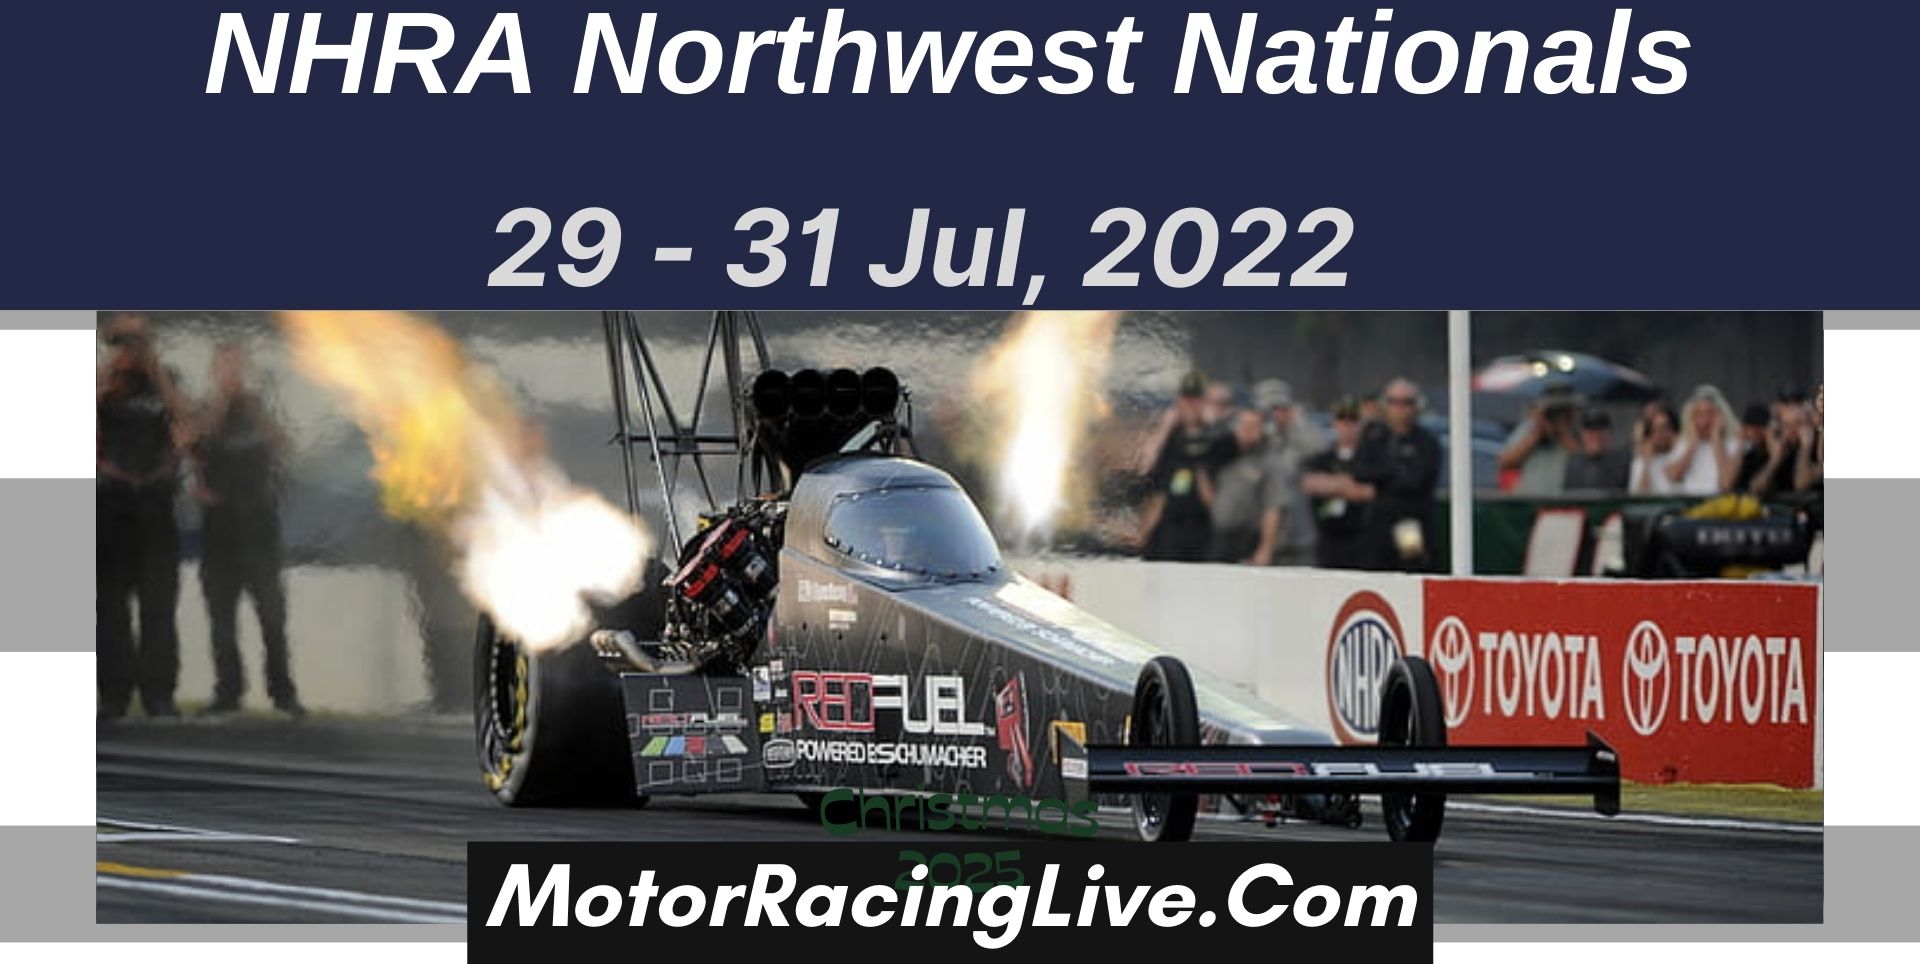 NHRA Northwest Nationals 2022 Live Stream